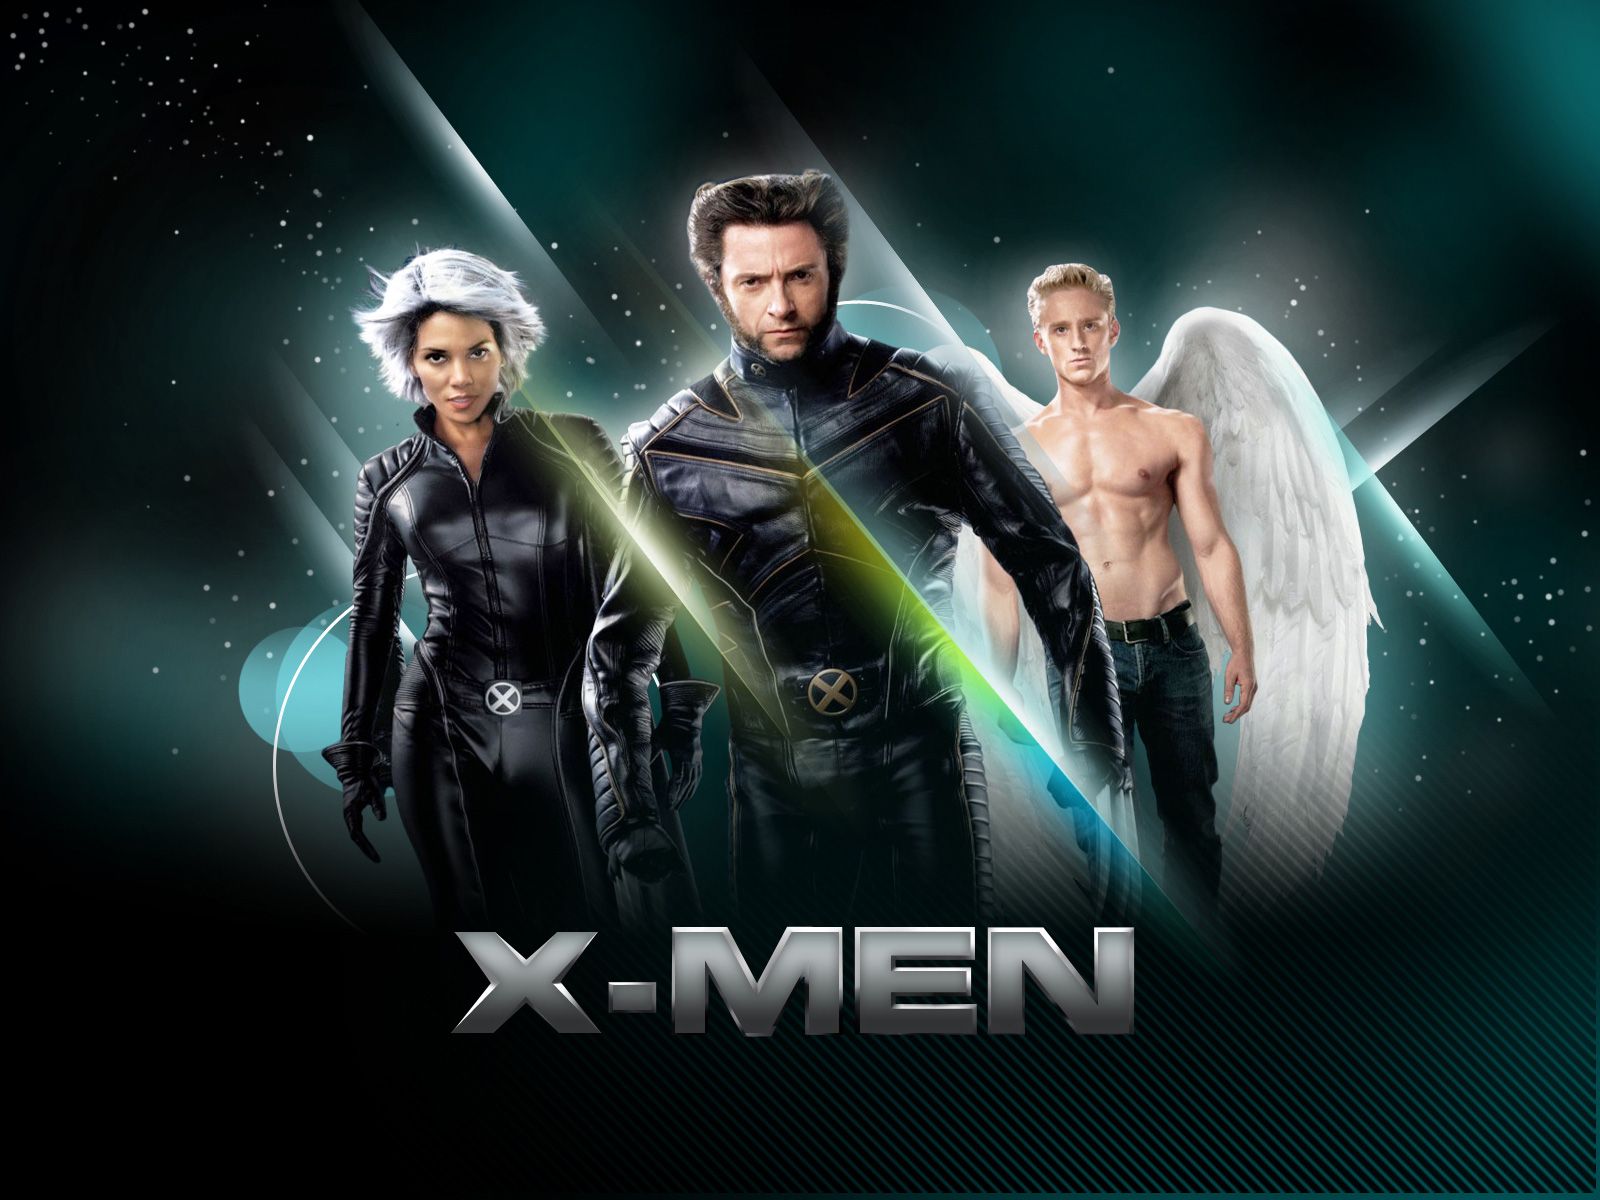 Creating X-MEN movie poster | Photoshop tutorials | Agus Web Design